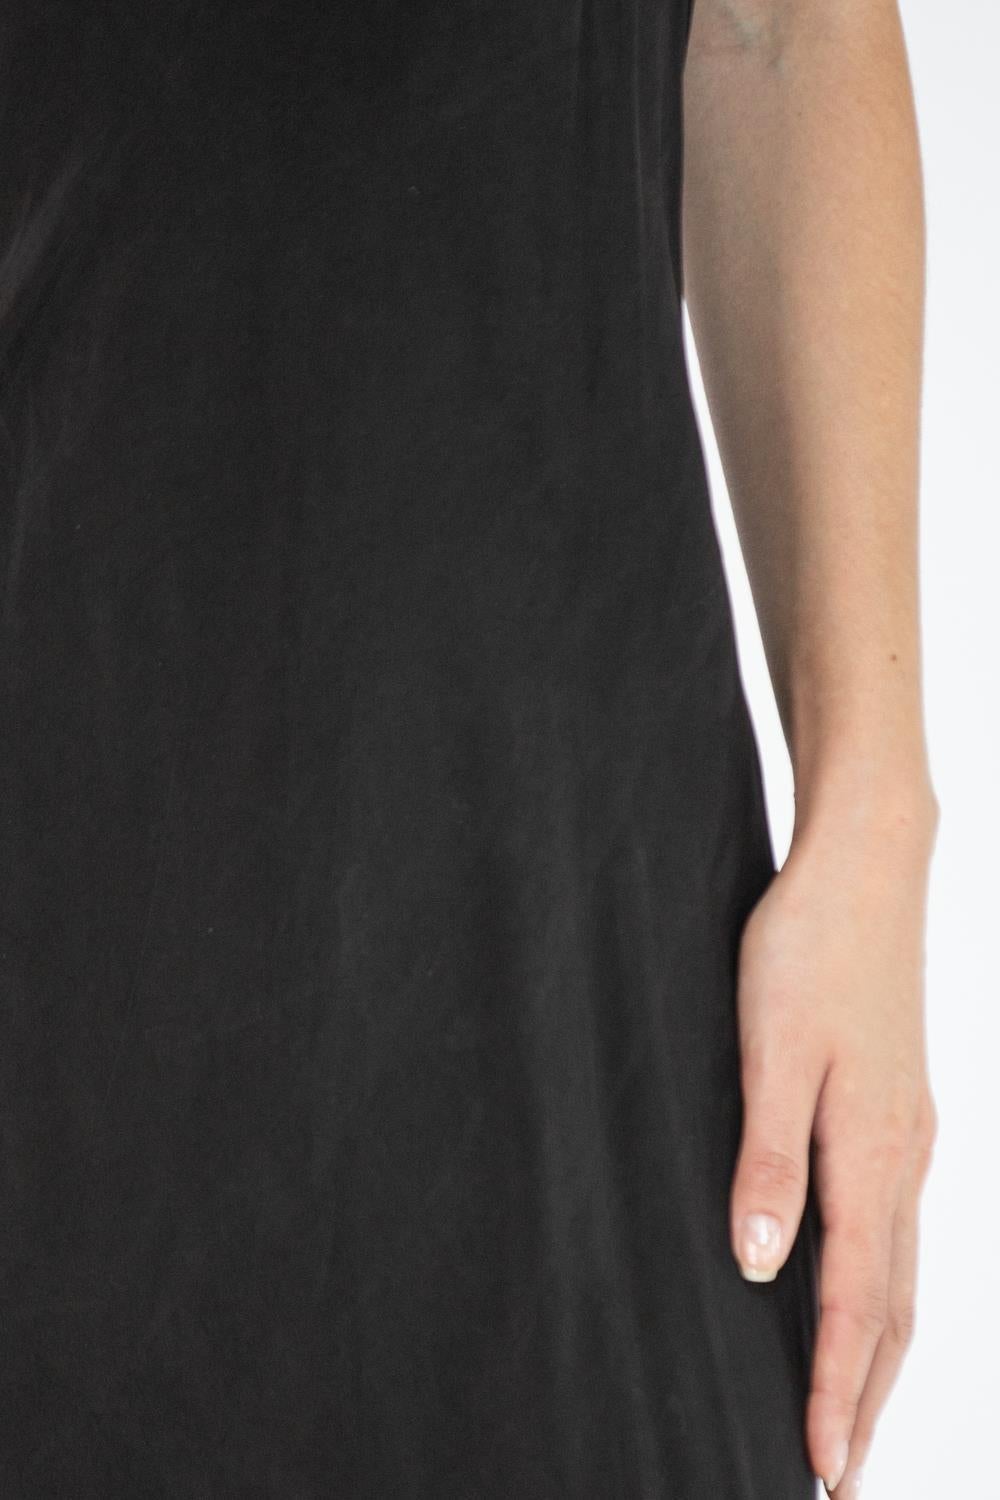 Morphew Collection Black Cold Rayon Bias Maxi Slip Dress Master Medium For Sale 3